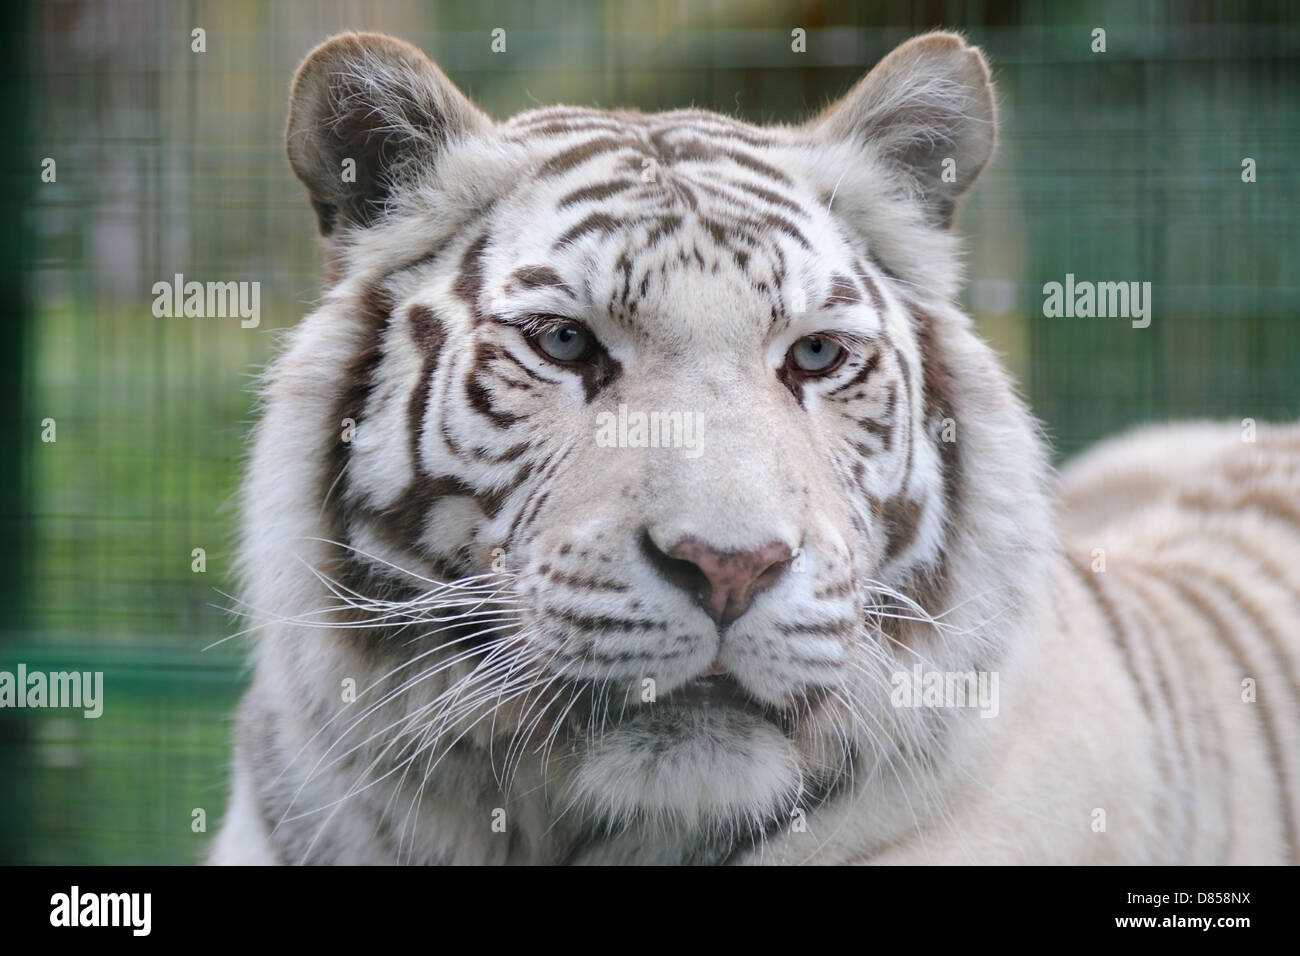 Tigre blanco de cerca con ojos azules Foto de stock